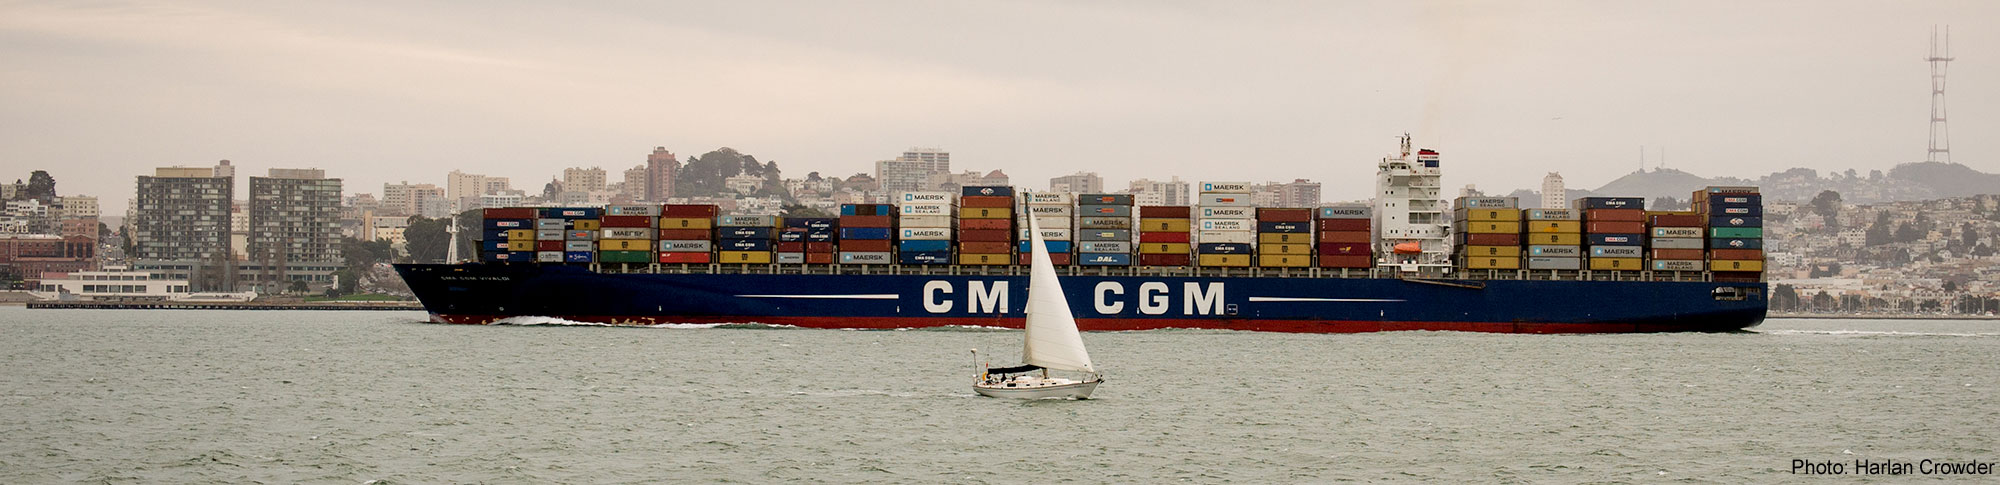 A cargo ship in San Francisco Bay, Photo by Harlan Crowder